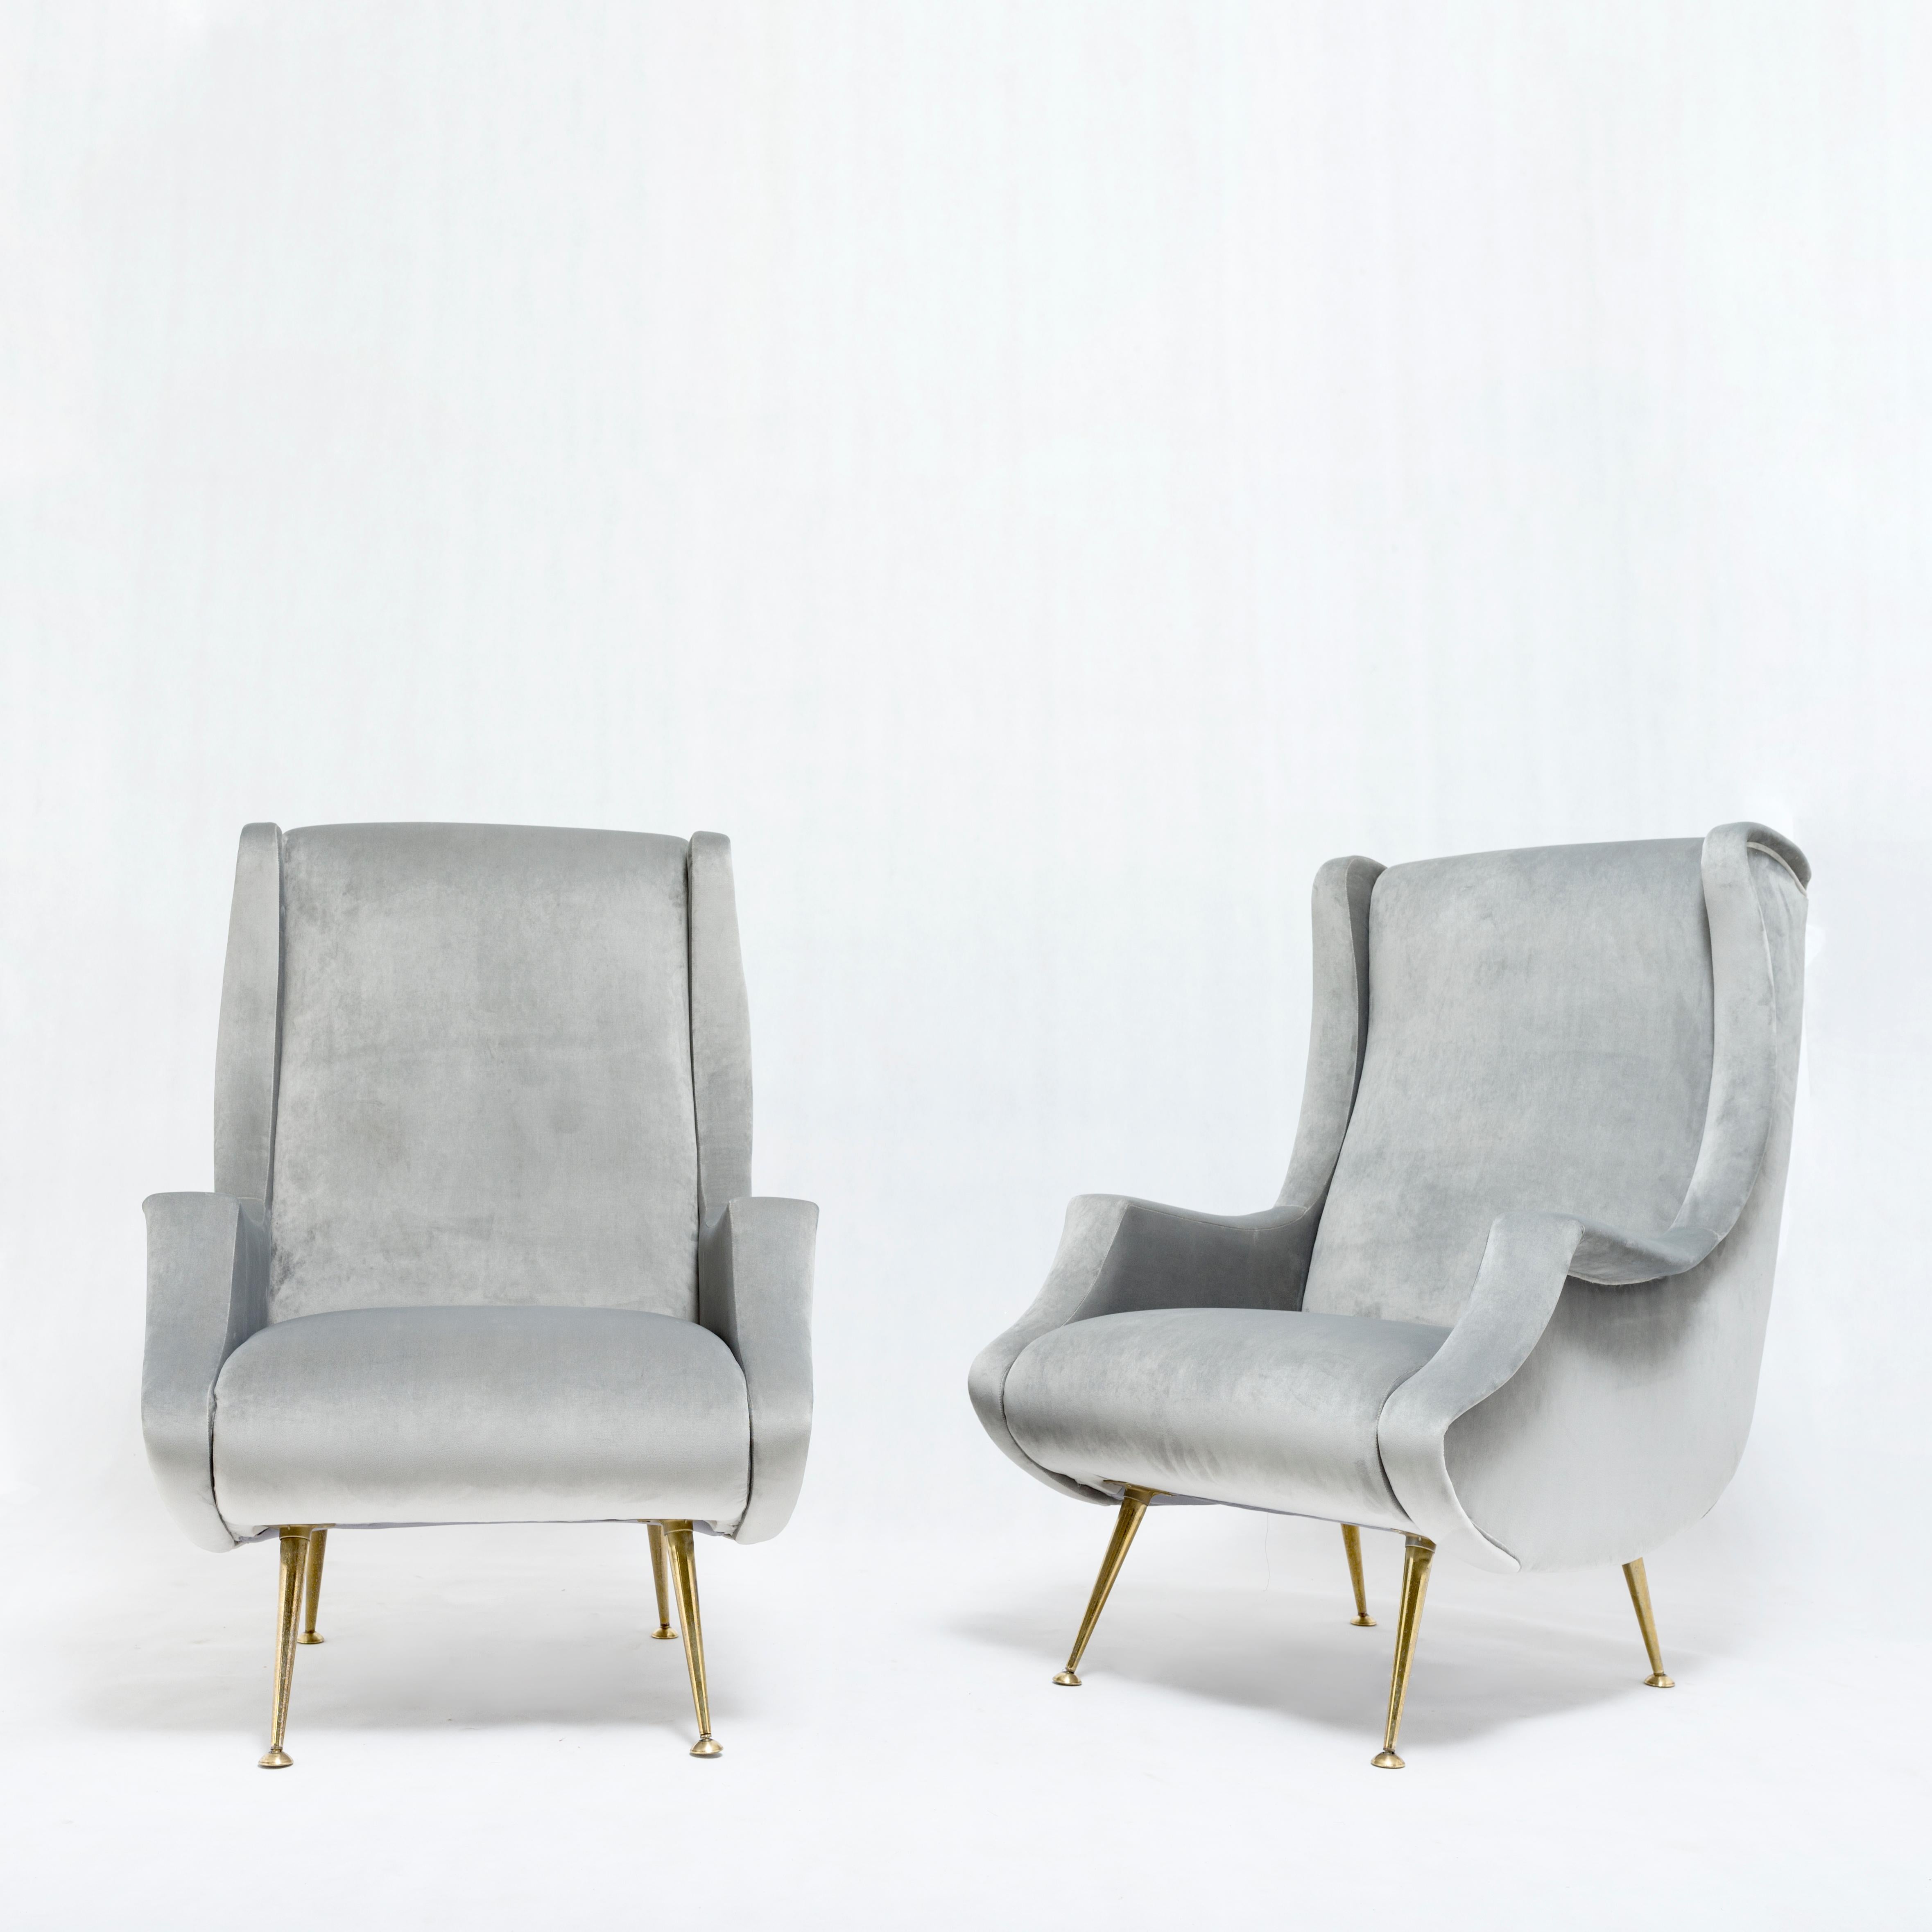 Mid-Century Modern Pair of armchairs by ISA Bergamo - Italy, 1950s